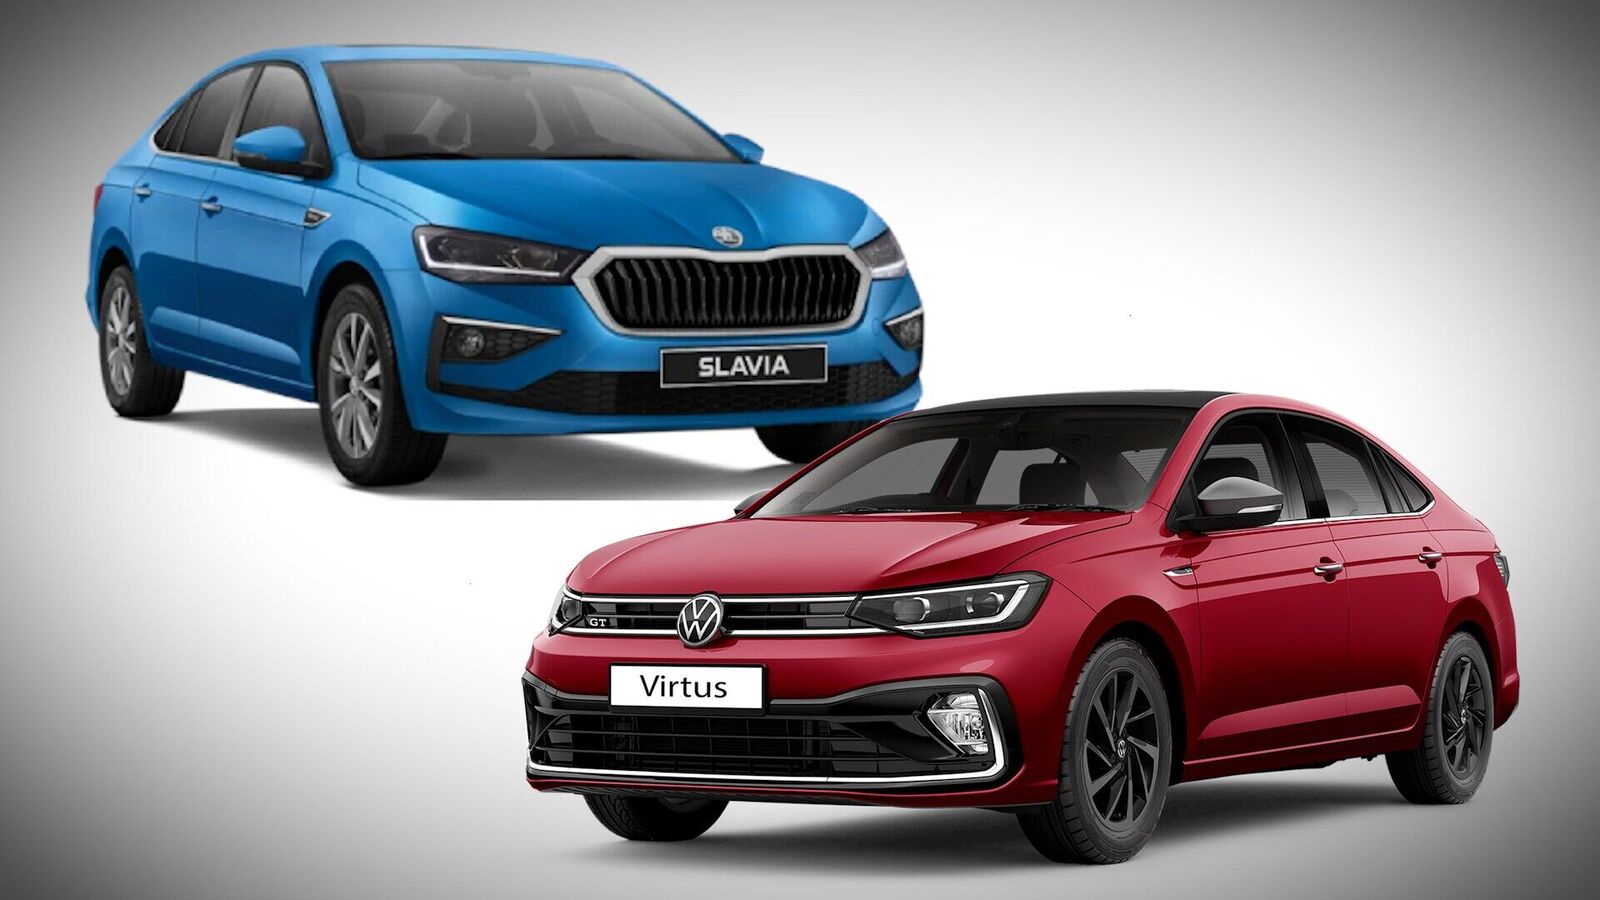 Skoda Slavia Vs Volkswagen Virtus Comparison – Price, Features &  Specifications